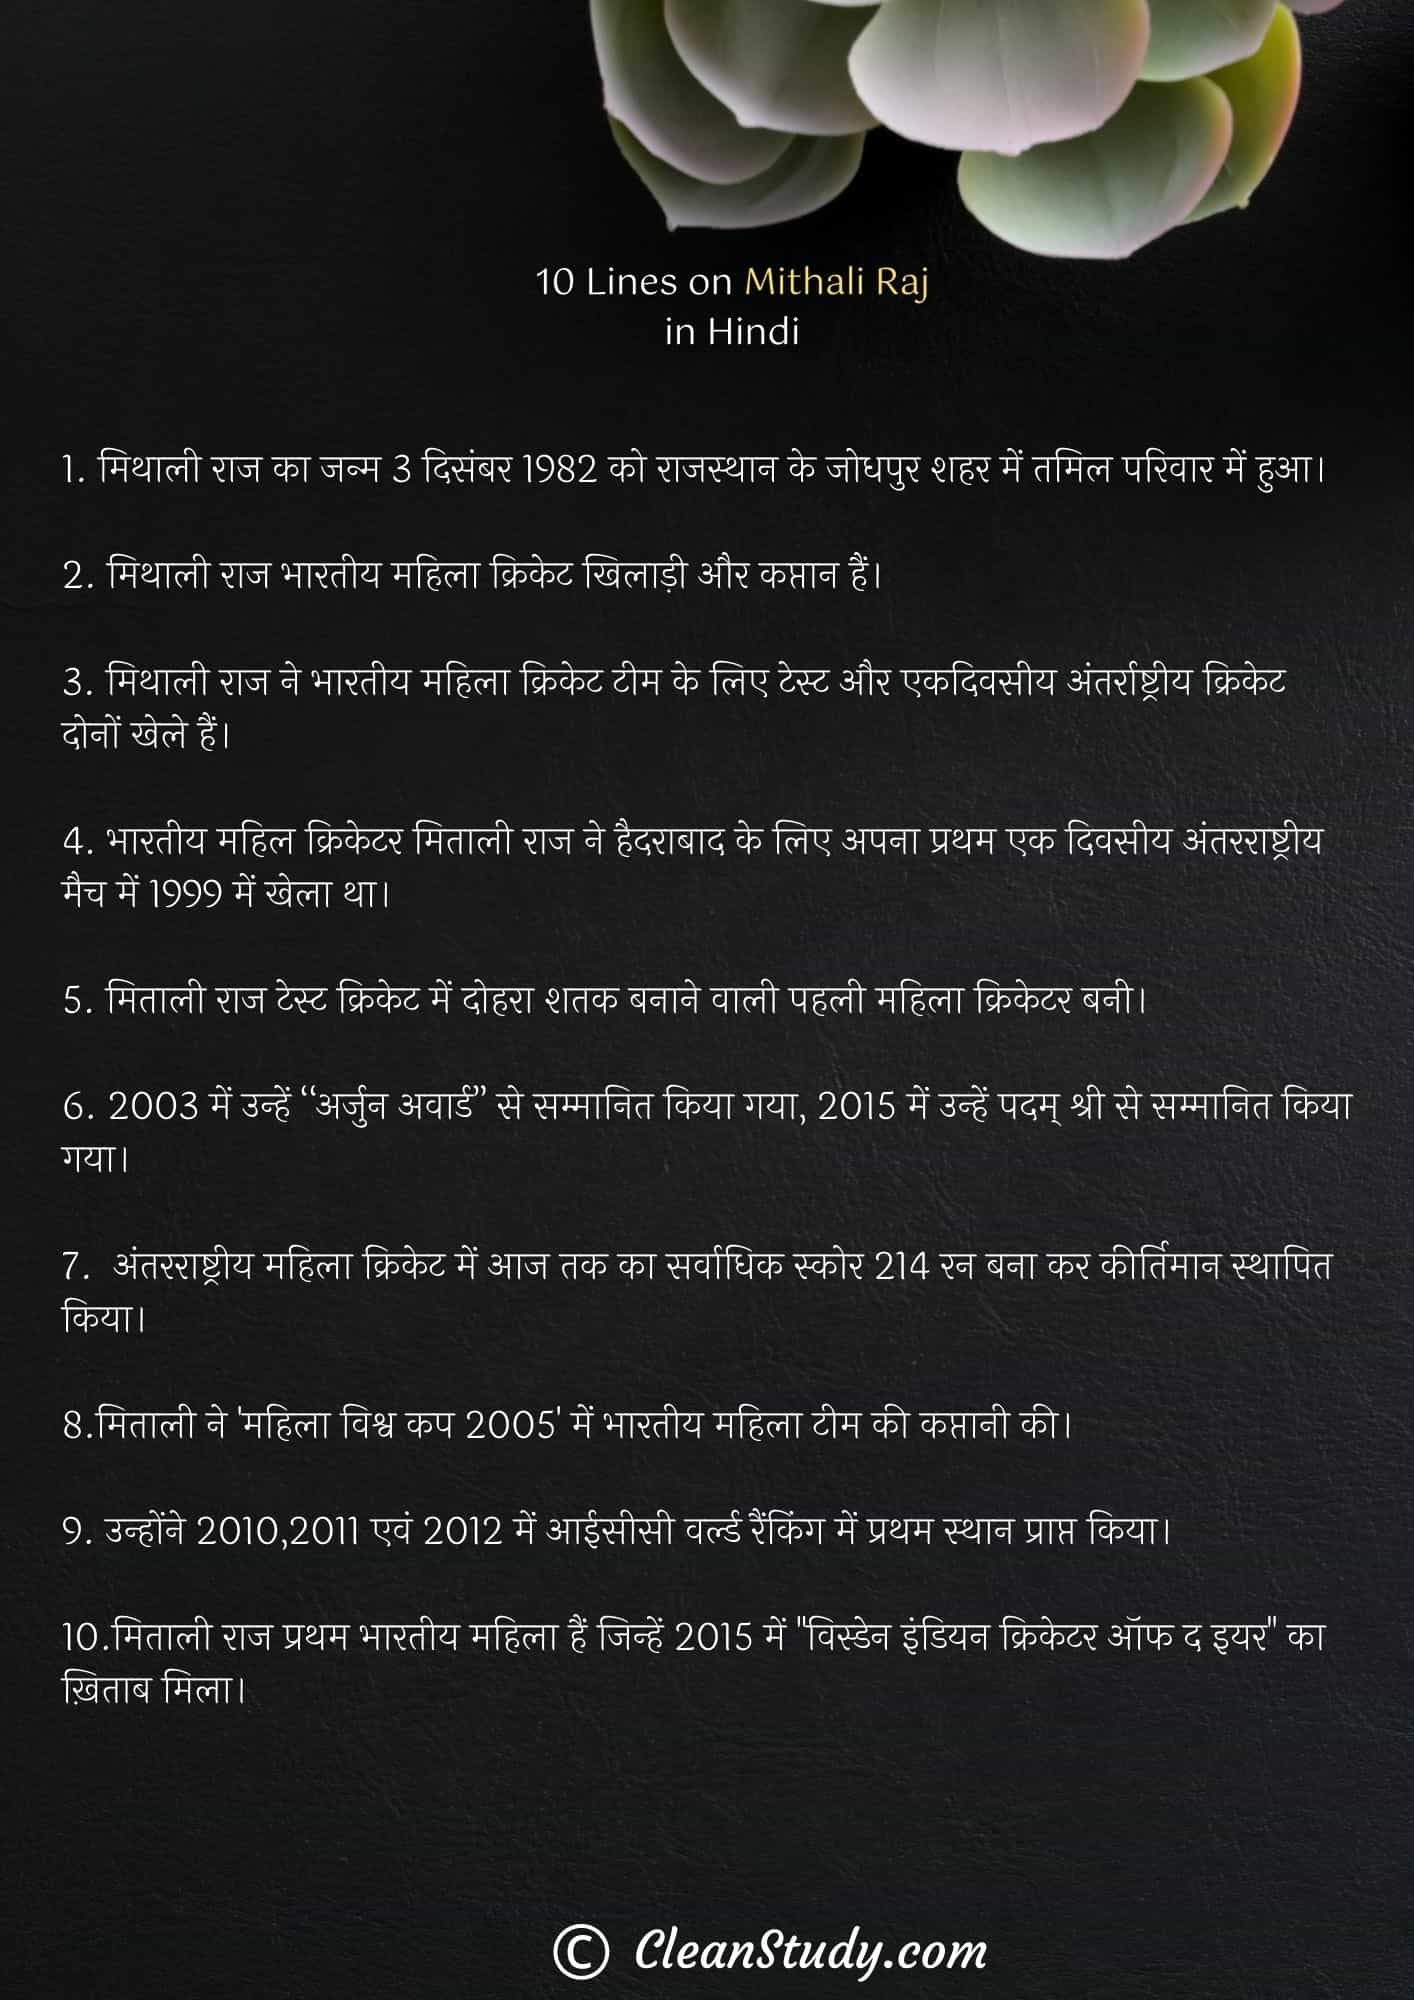 10 Lines on Mithali Raj in Hindi